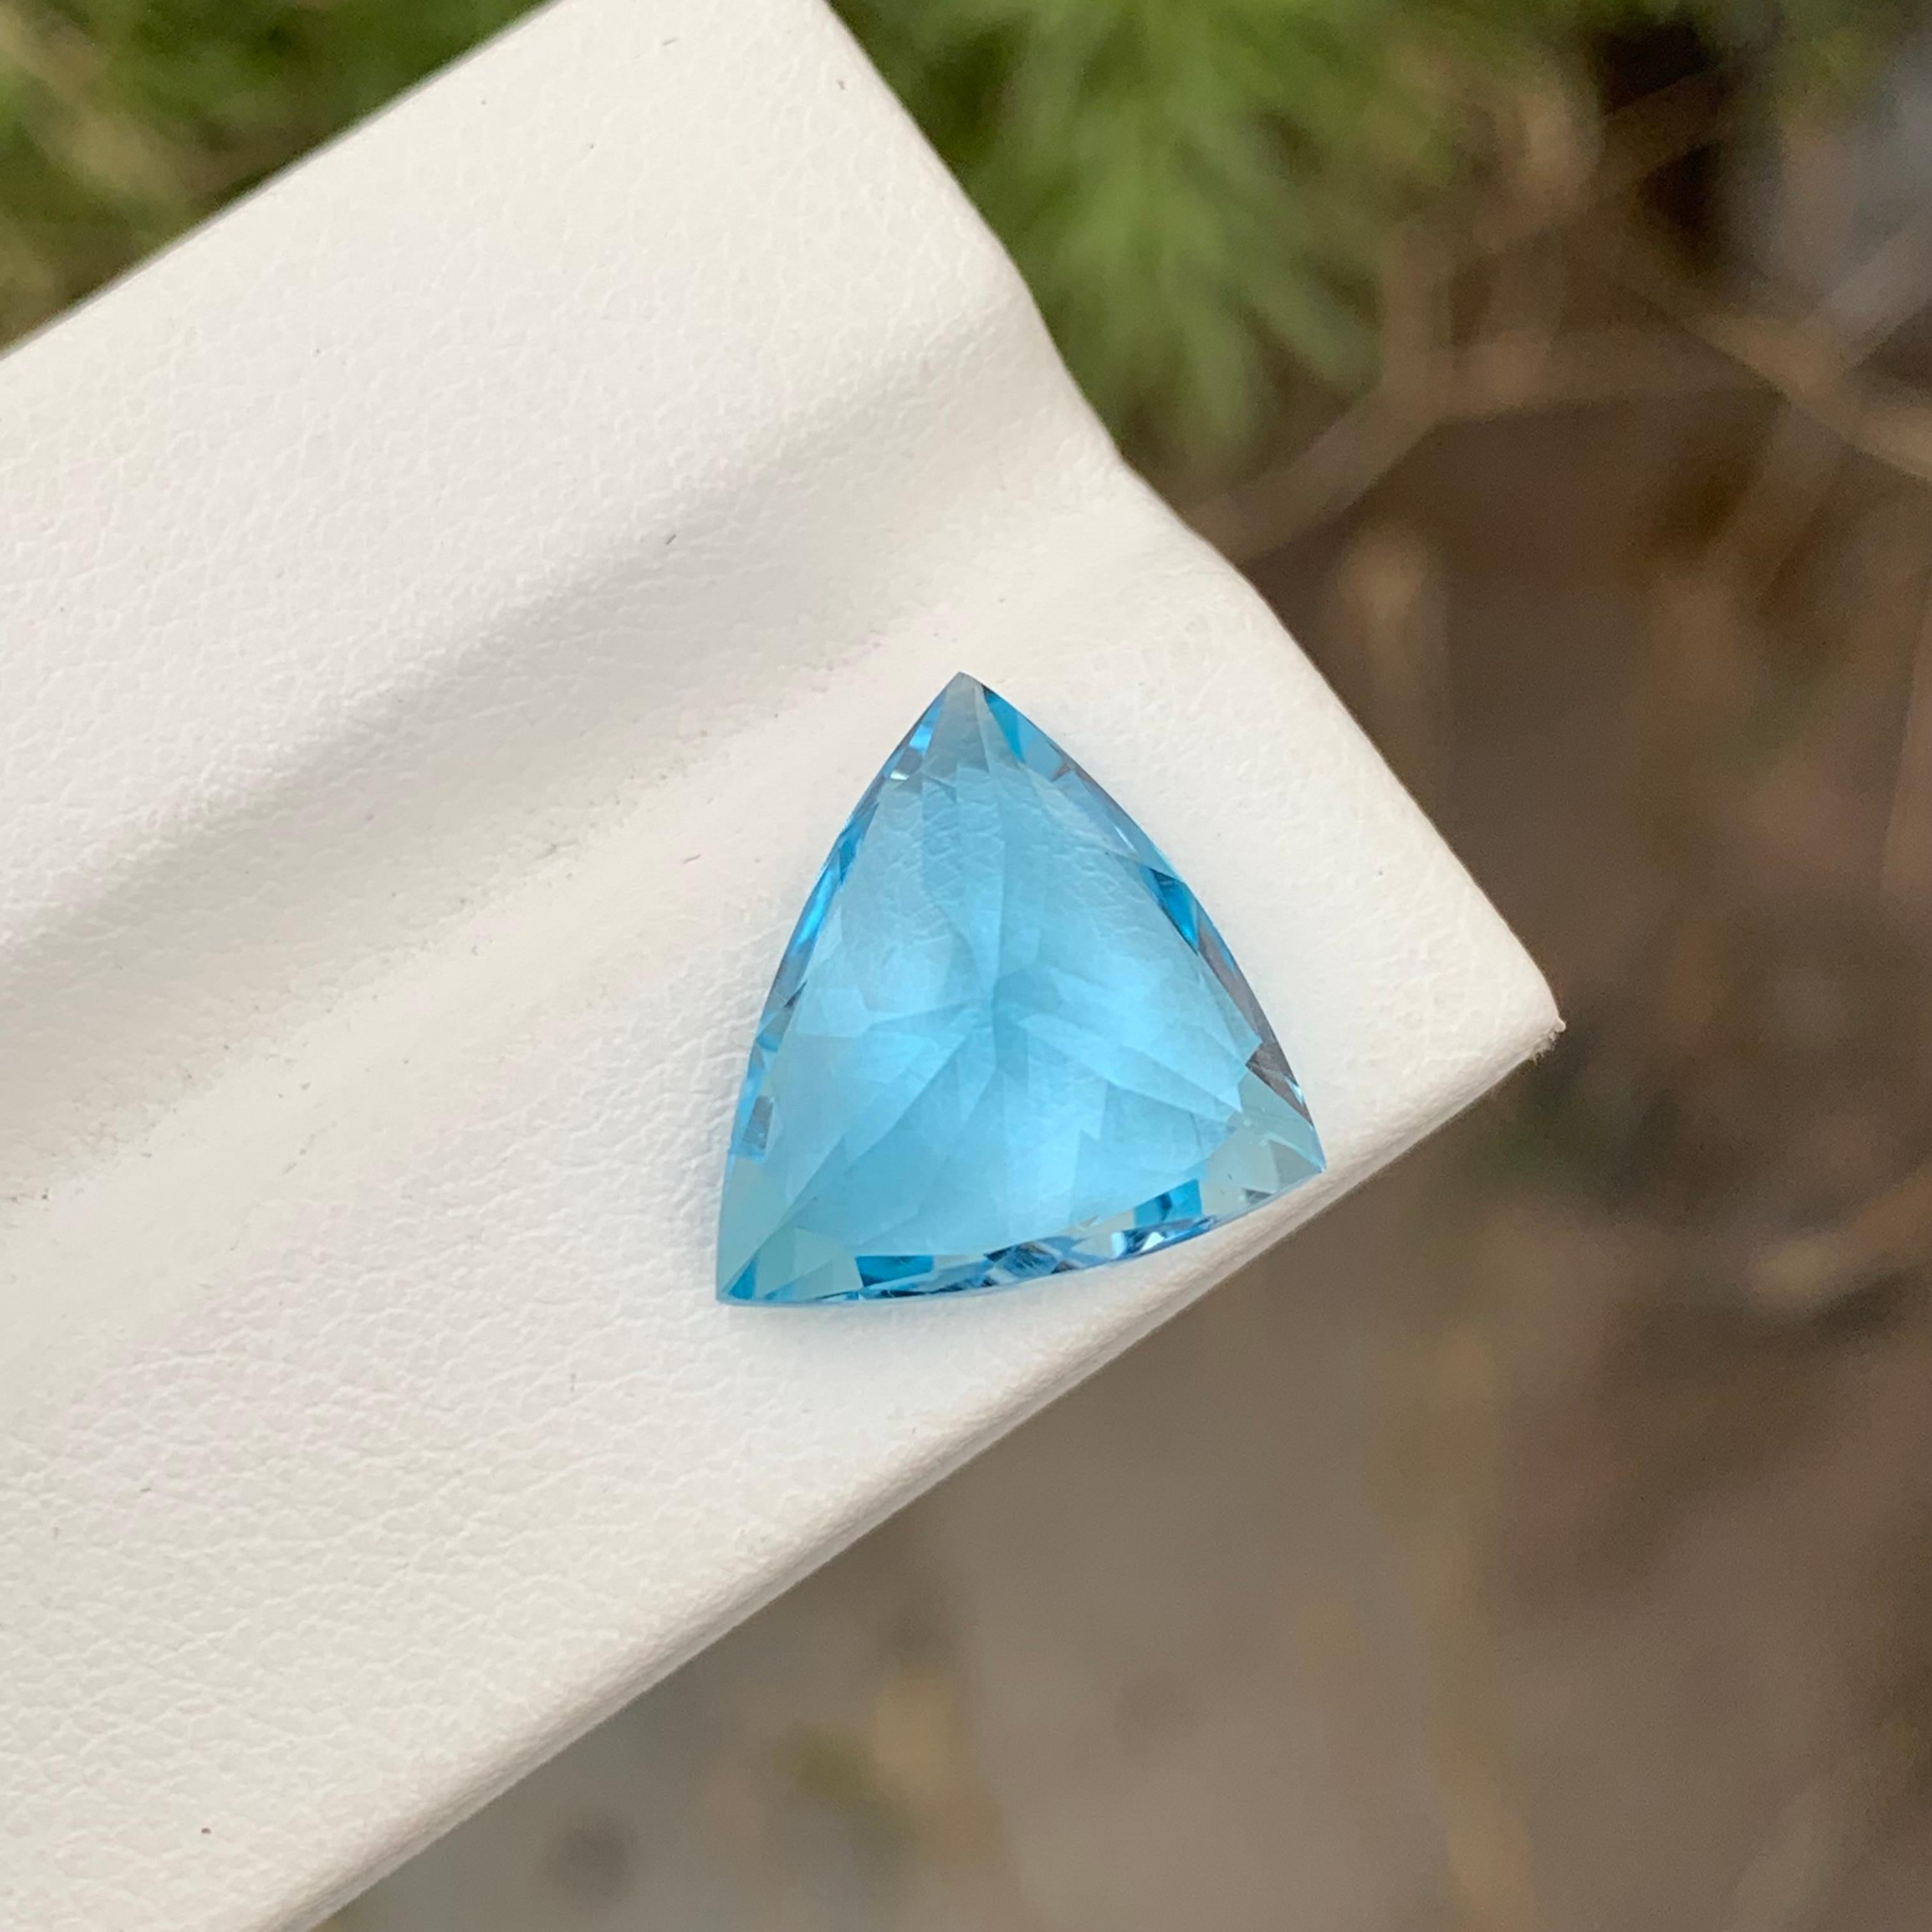 9.55 Carat Trillion Cut Loose Blue Topaz Gem For Jewellery Making  For Sale 8